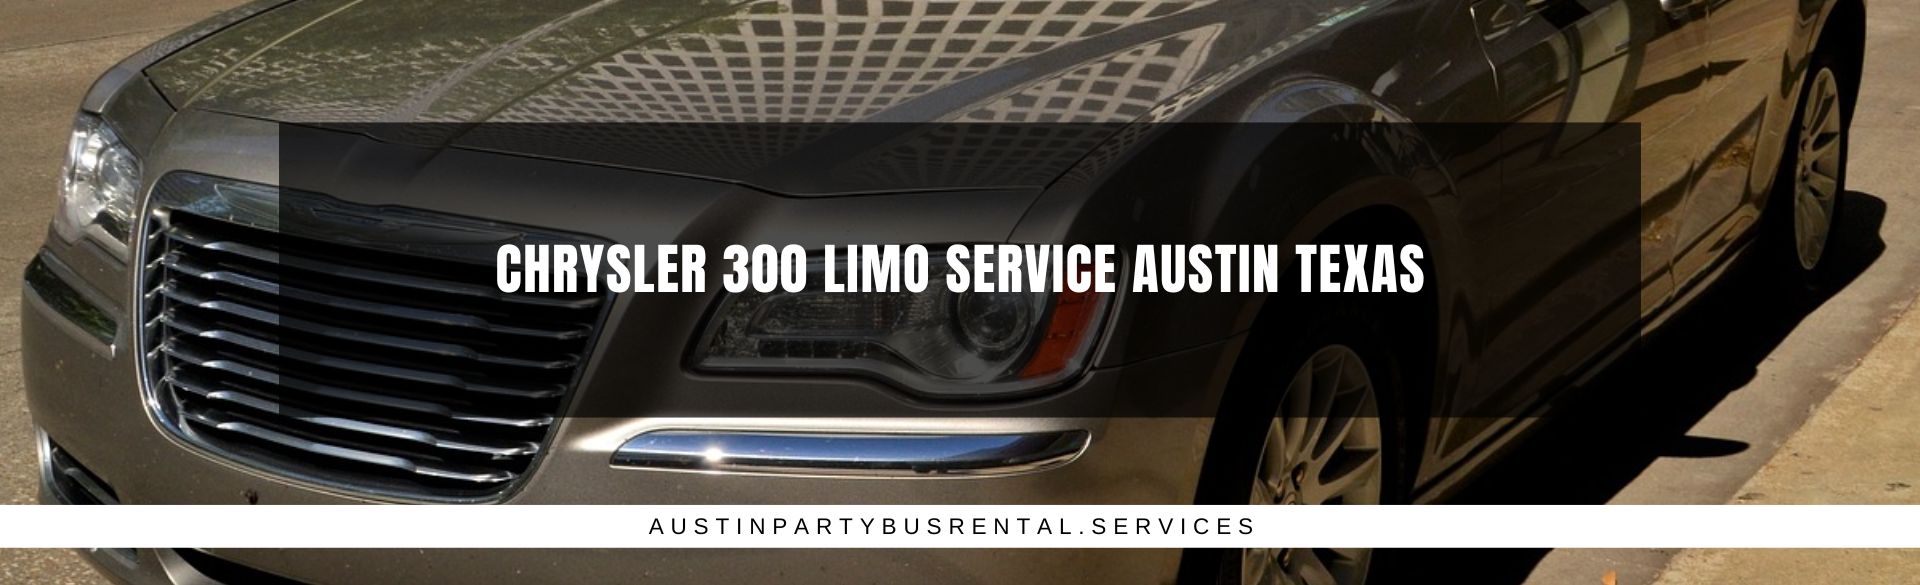 Chrysler 300 Limo Service Austin Texas